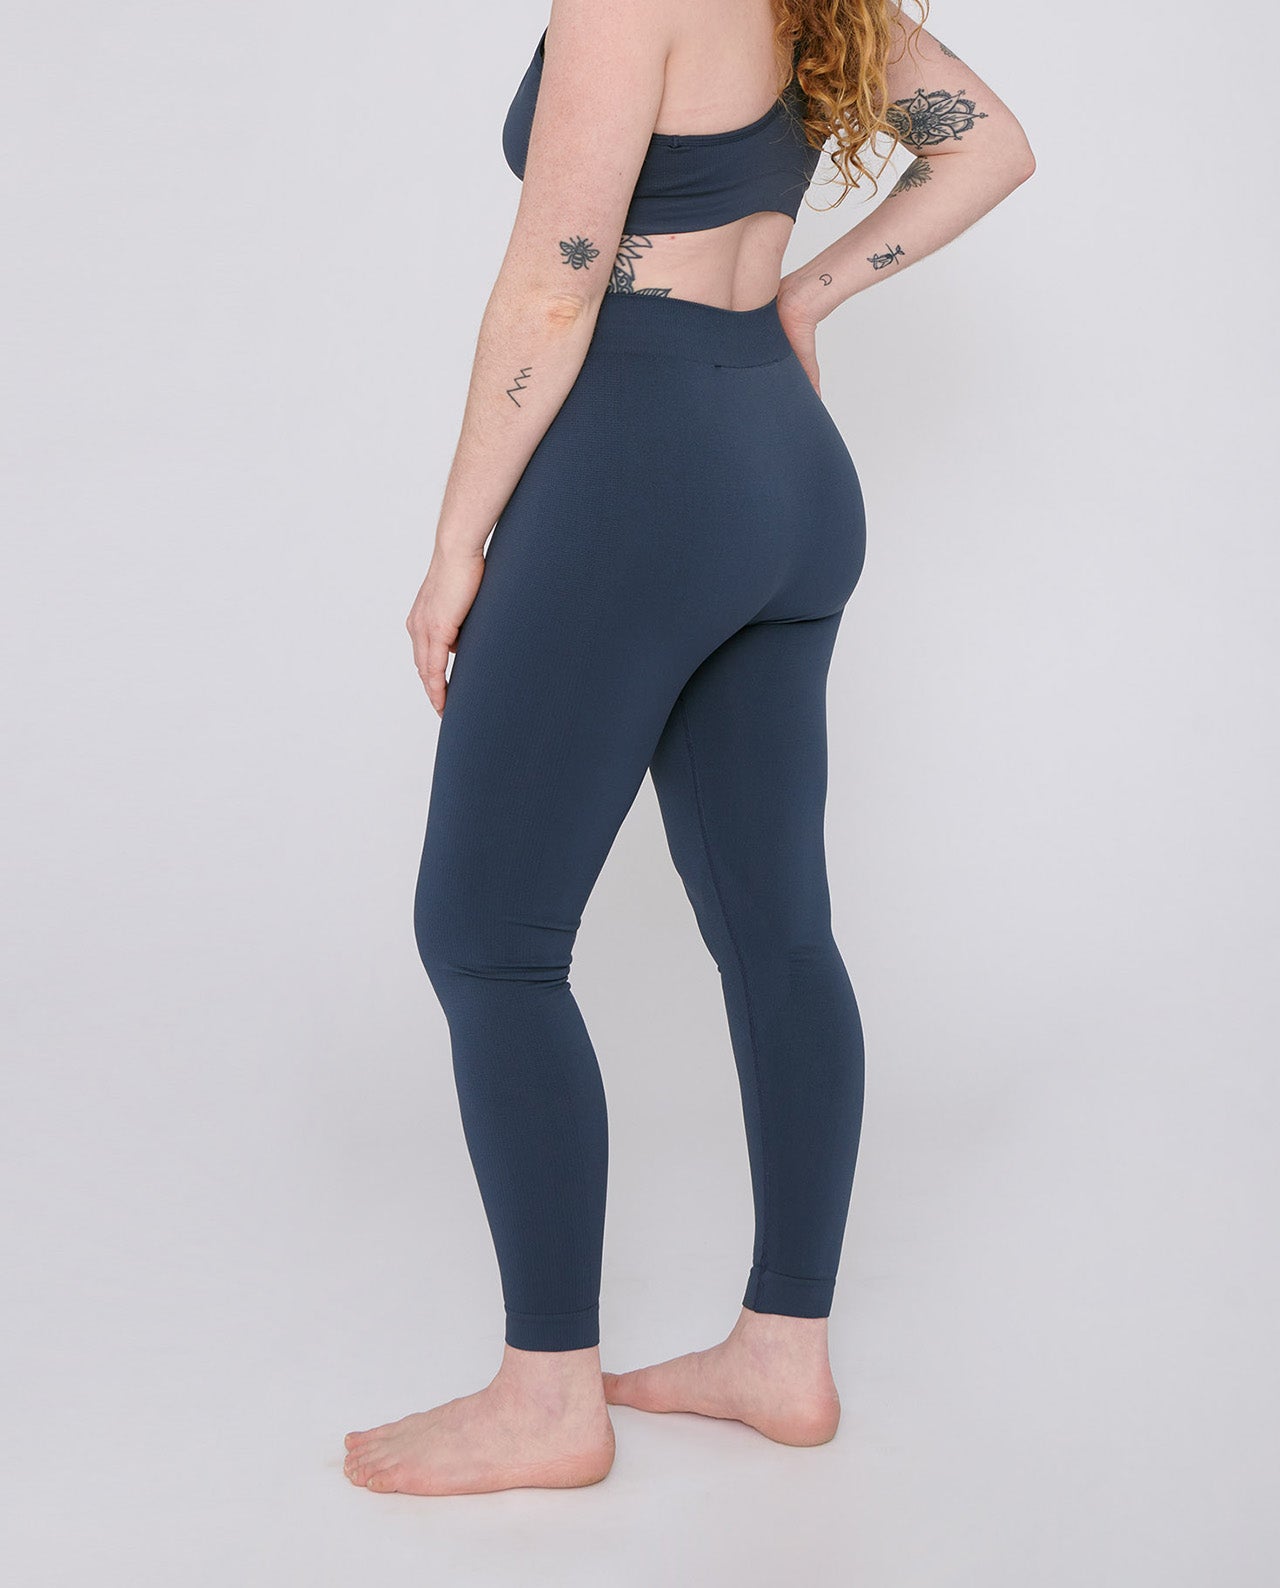 marché commun organic basics legging femme sport yoga recyclé bleu gris